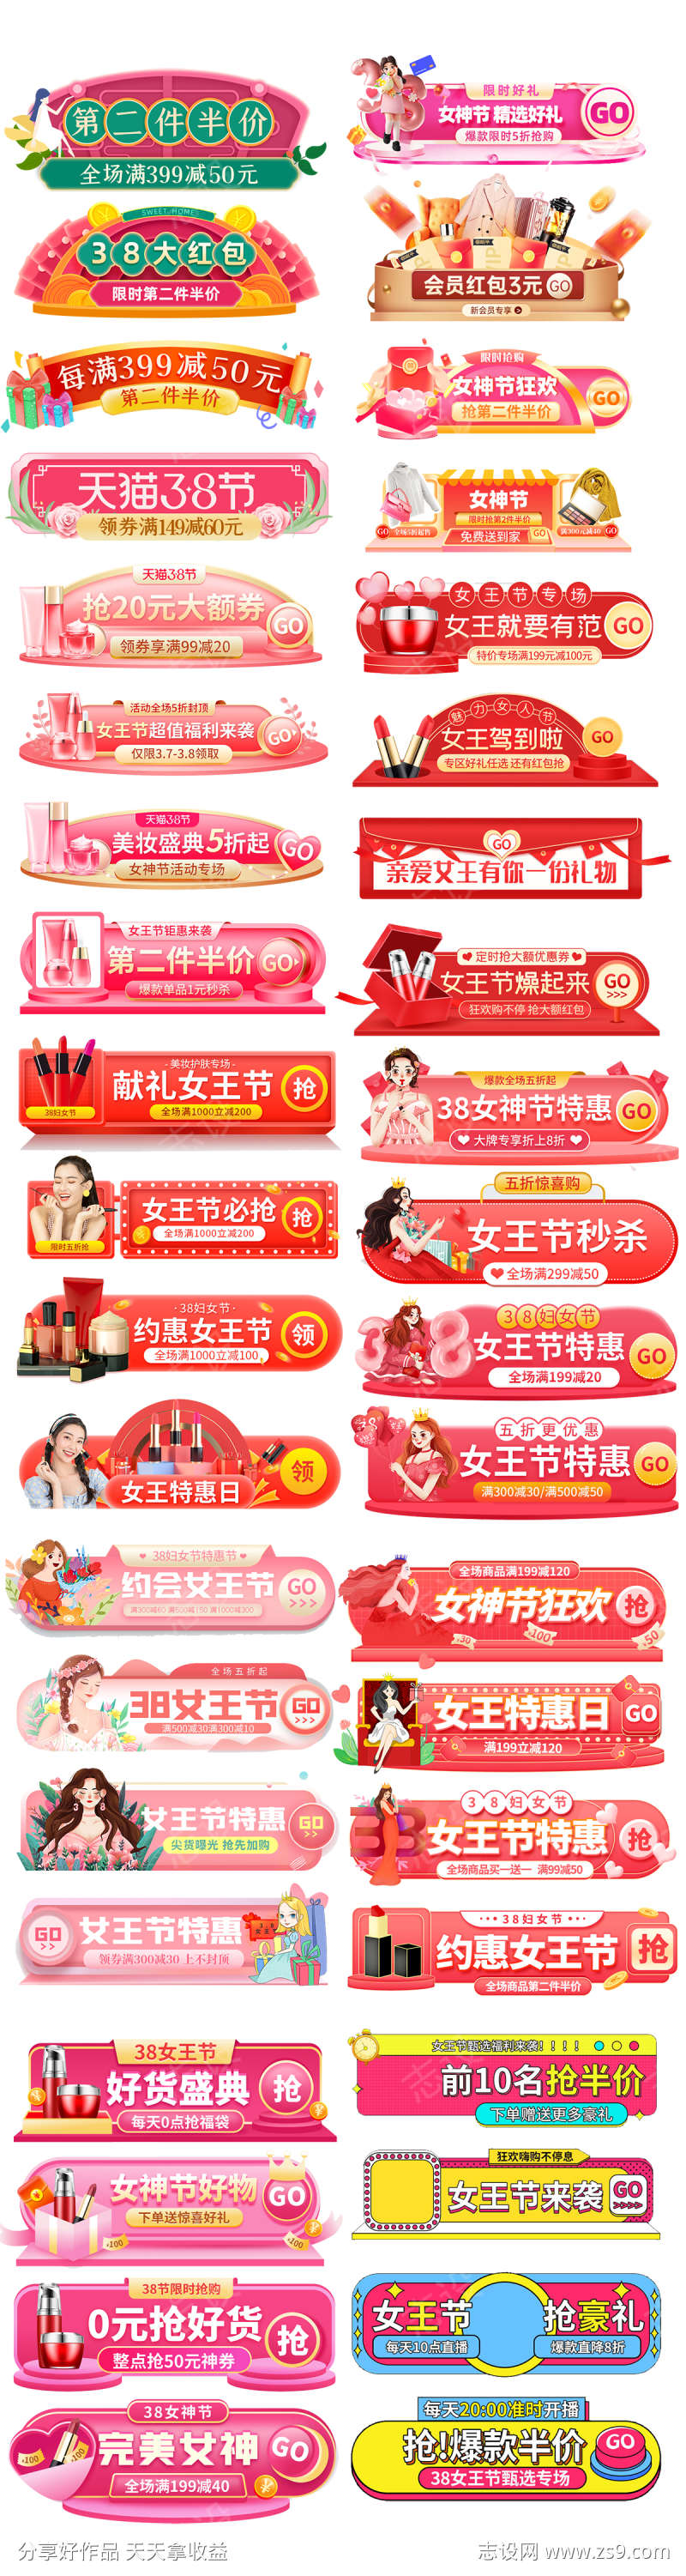 38女王节妇女节电商胶囊banner